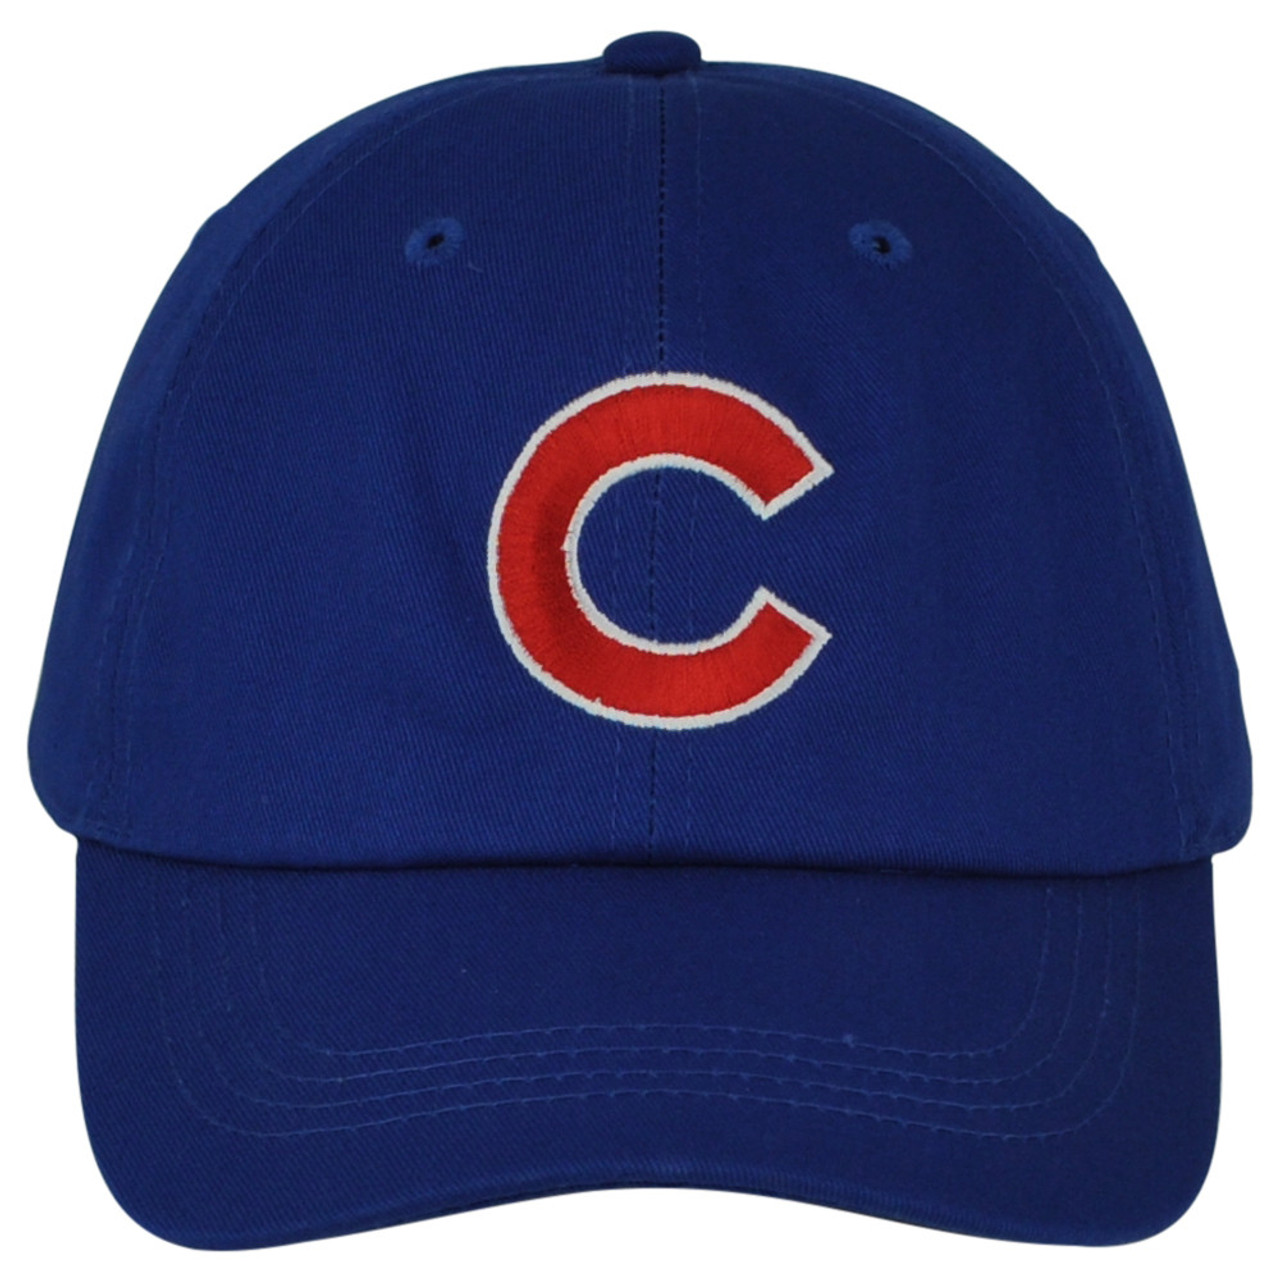 Official MLB Merchandise Hats, MLB Merchandise Cap, MLB